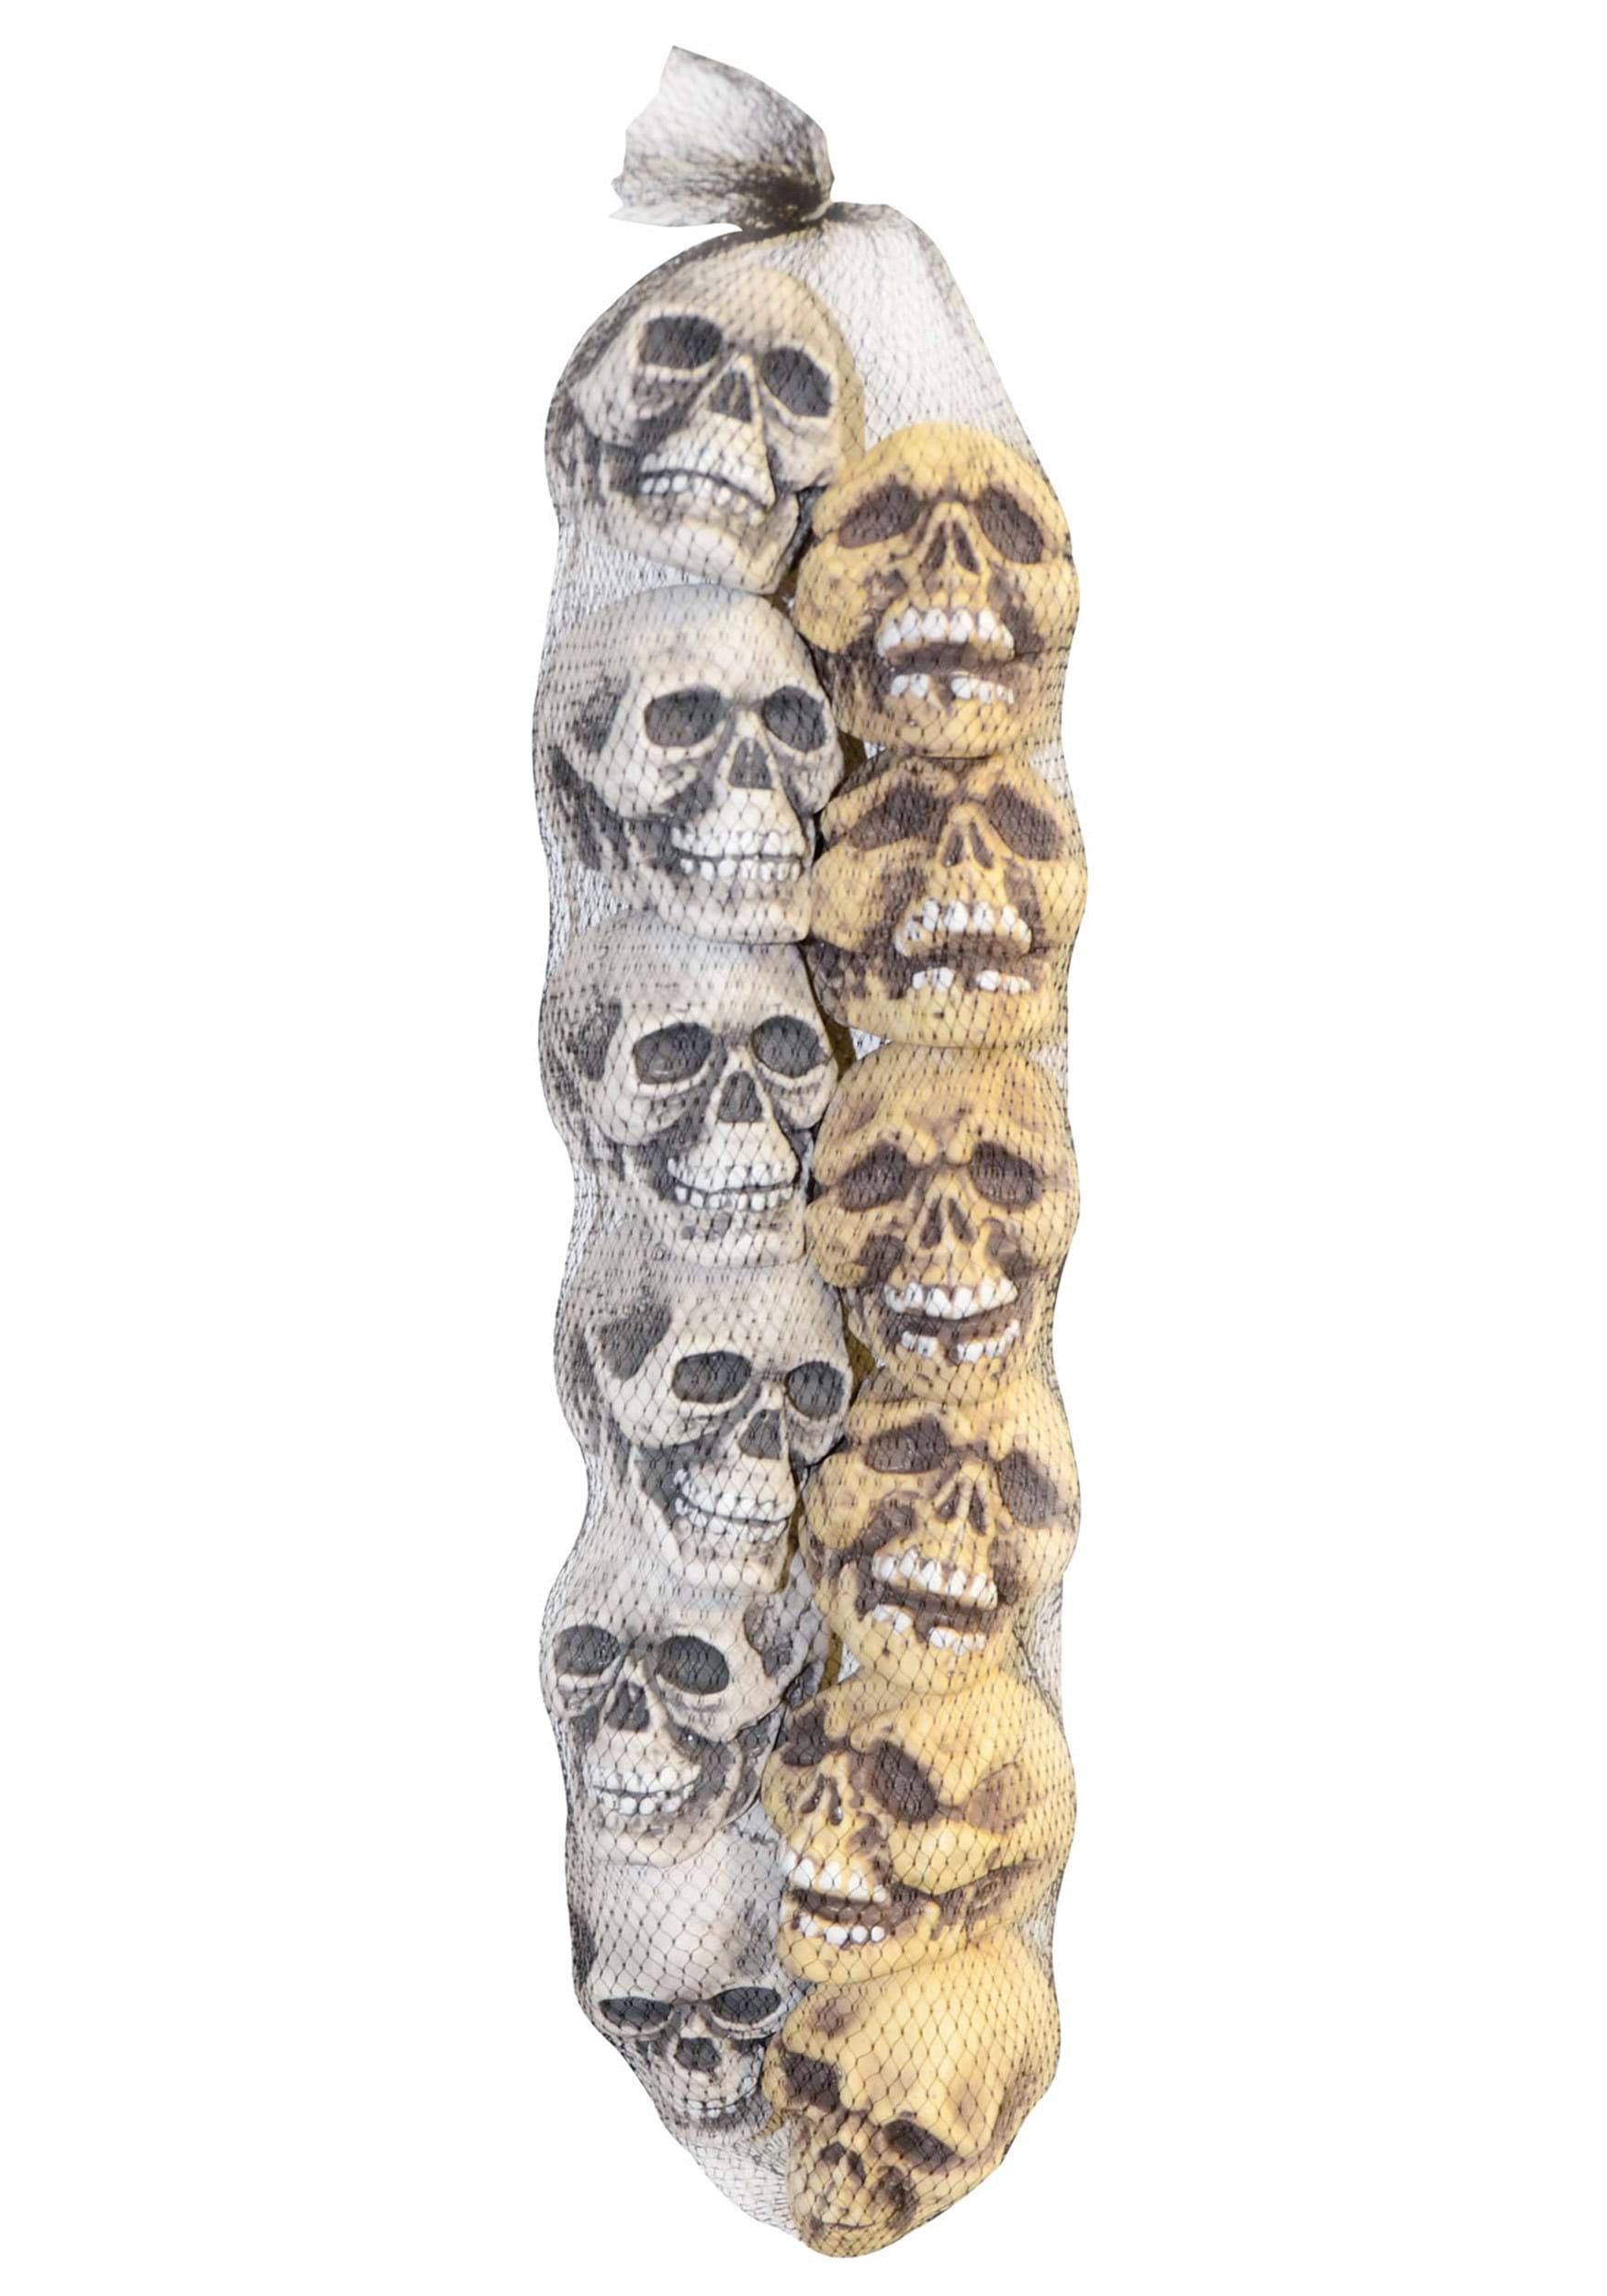 12 Piece Bag of Skulls Decoration | Halloween Décor